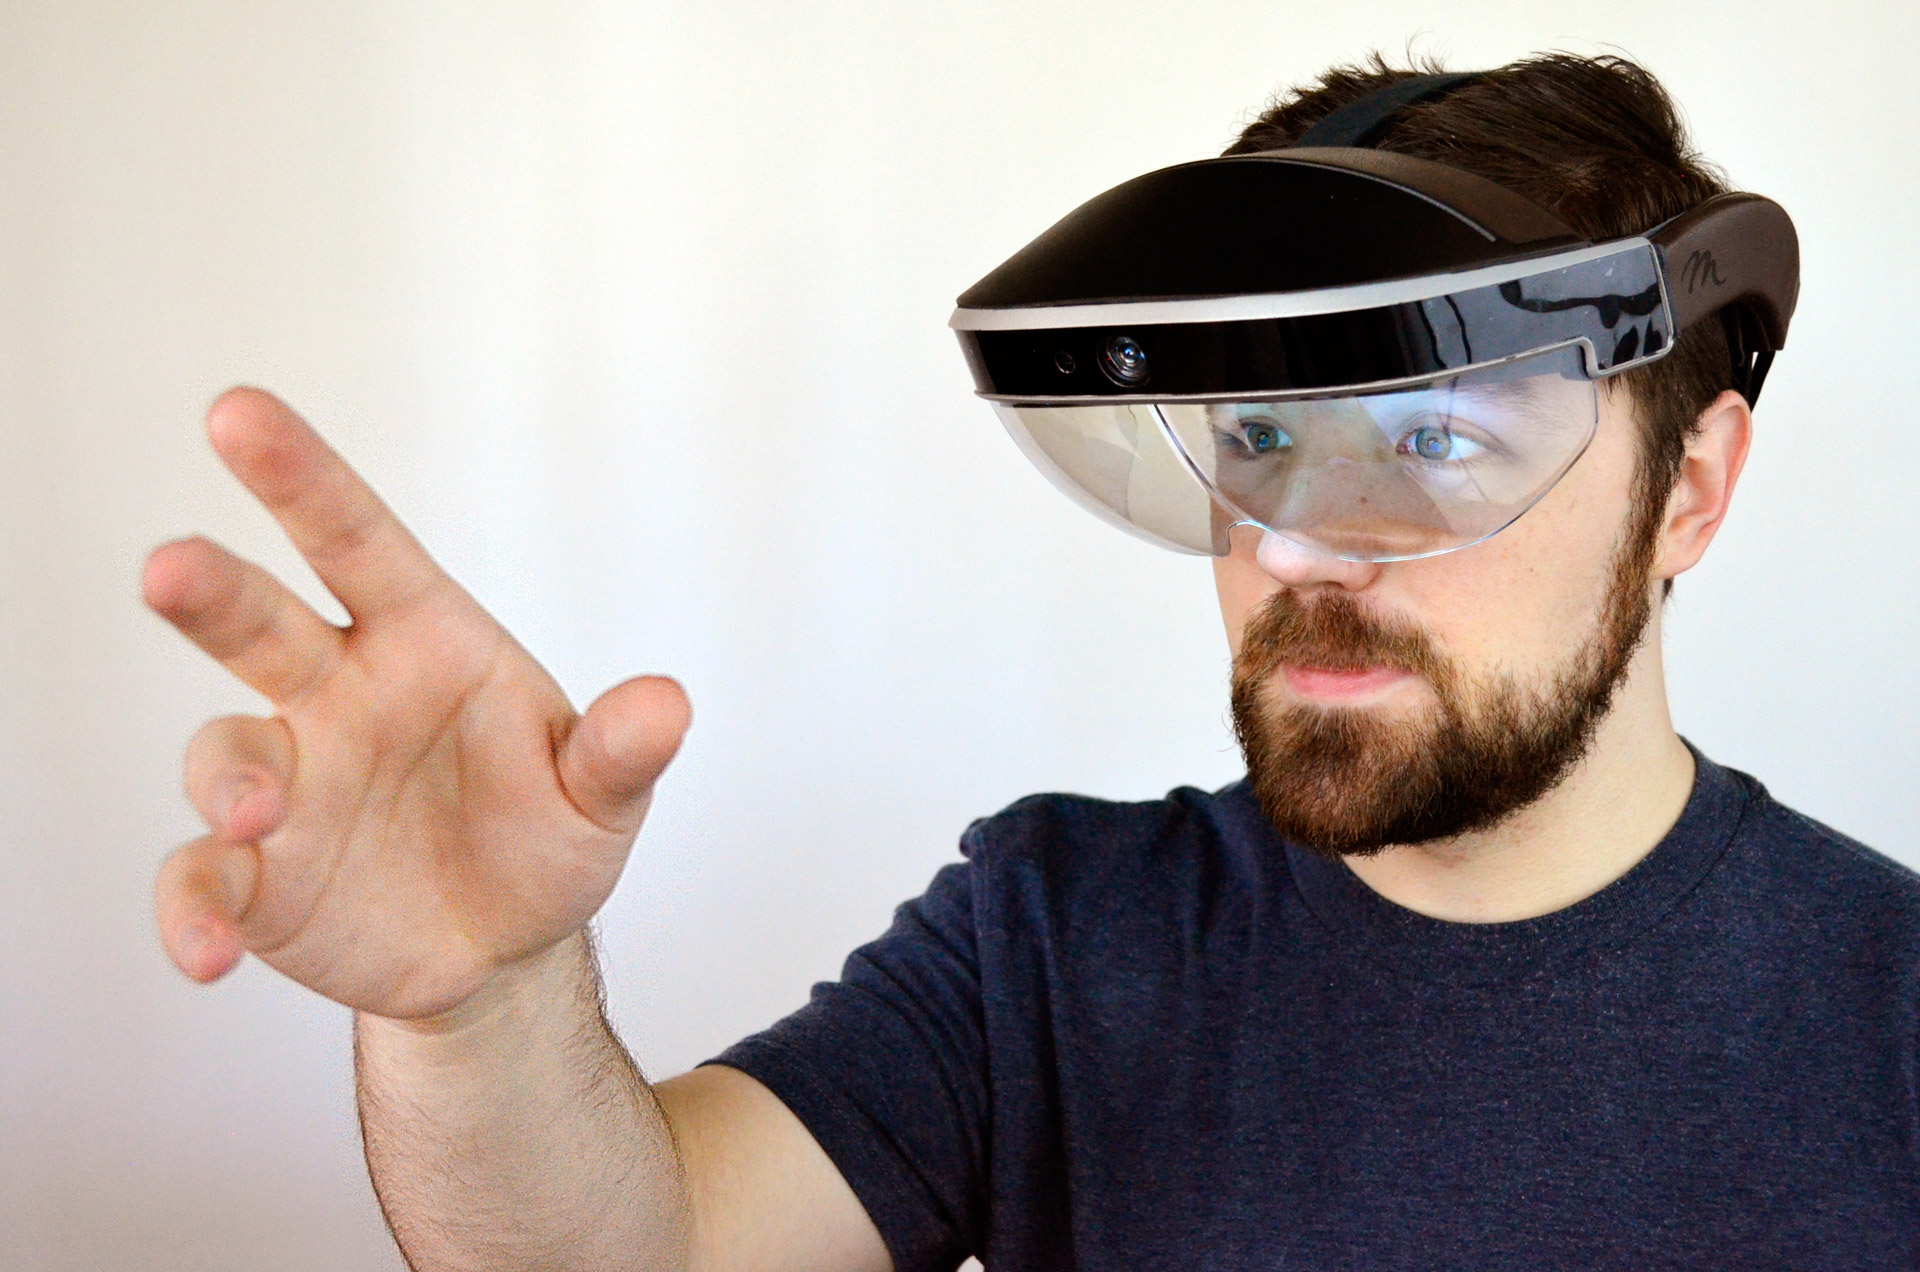 meta-2-development-kit-hands-on-augmented-reality-headset-AR